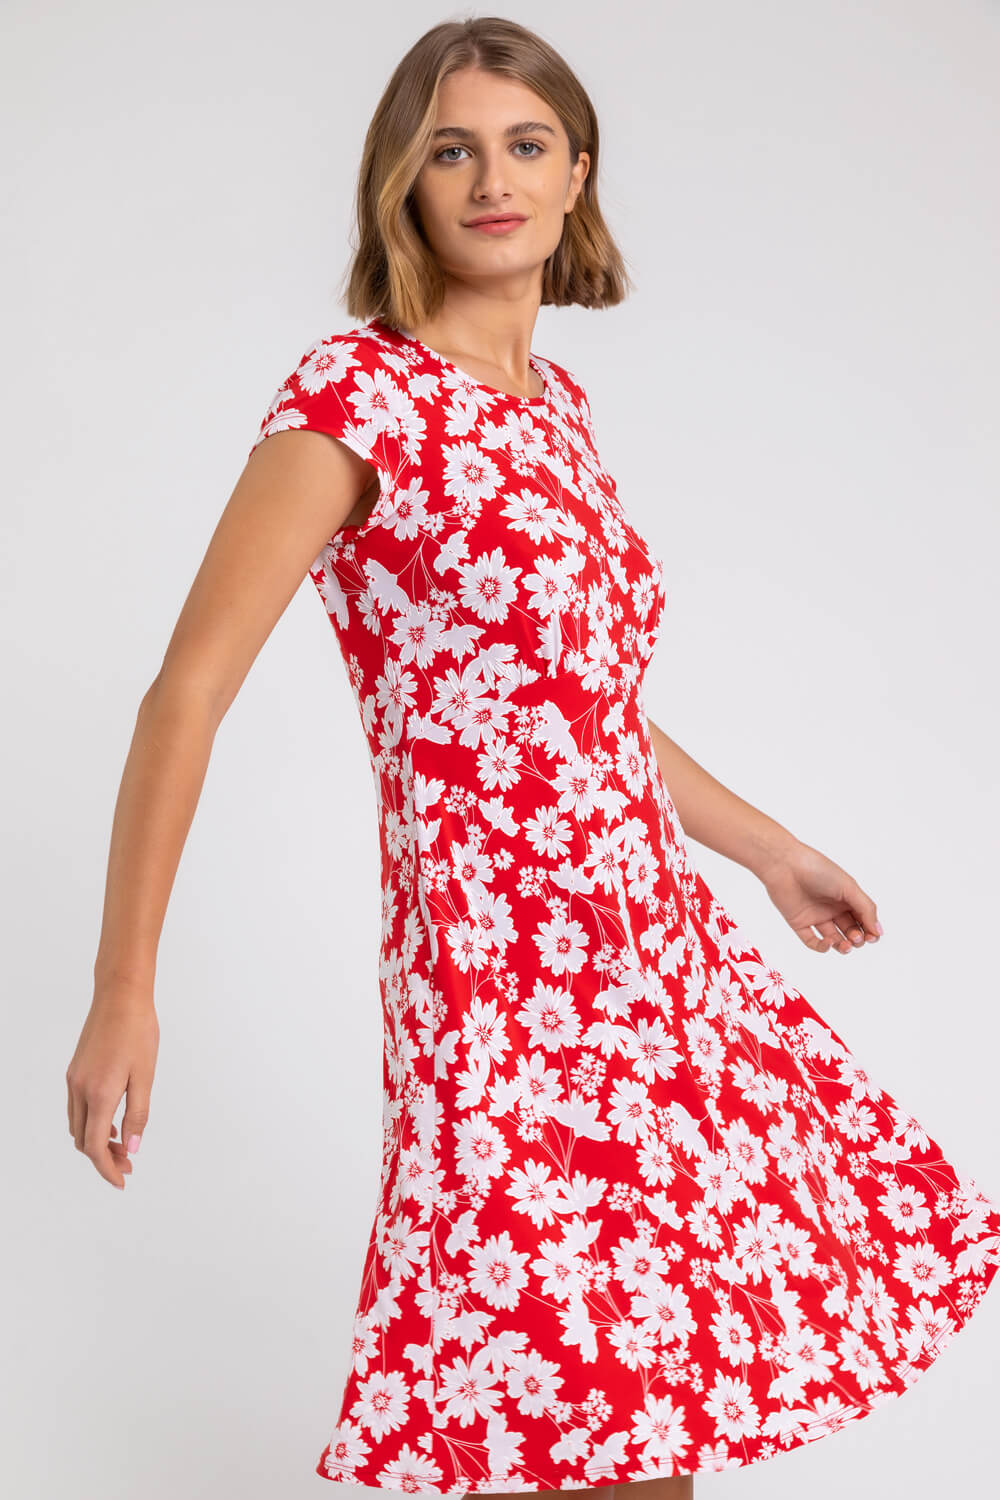 Floral Print Stretch Jersey Tea Dress